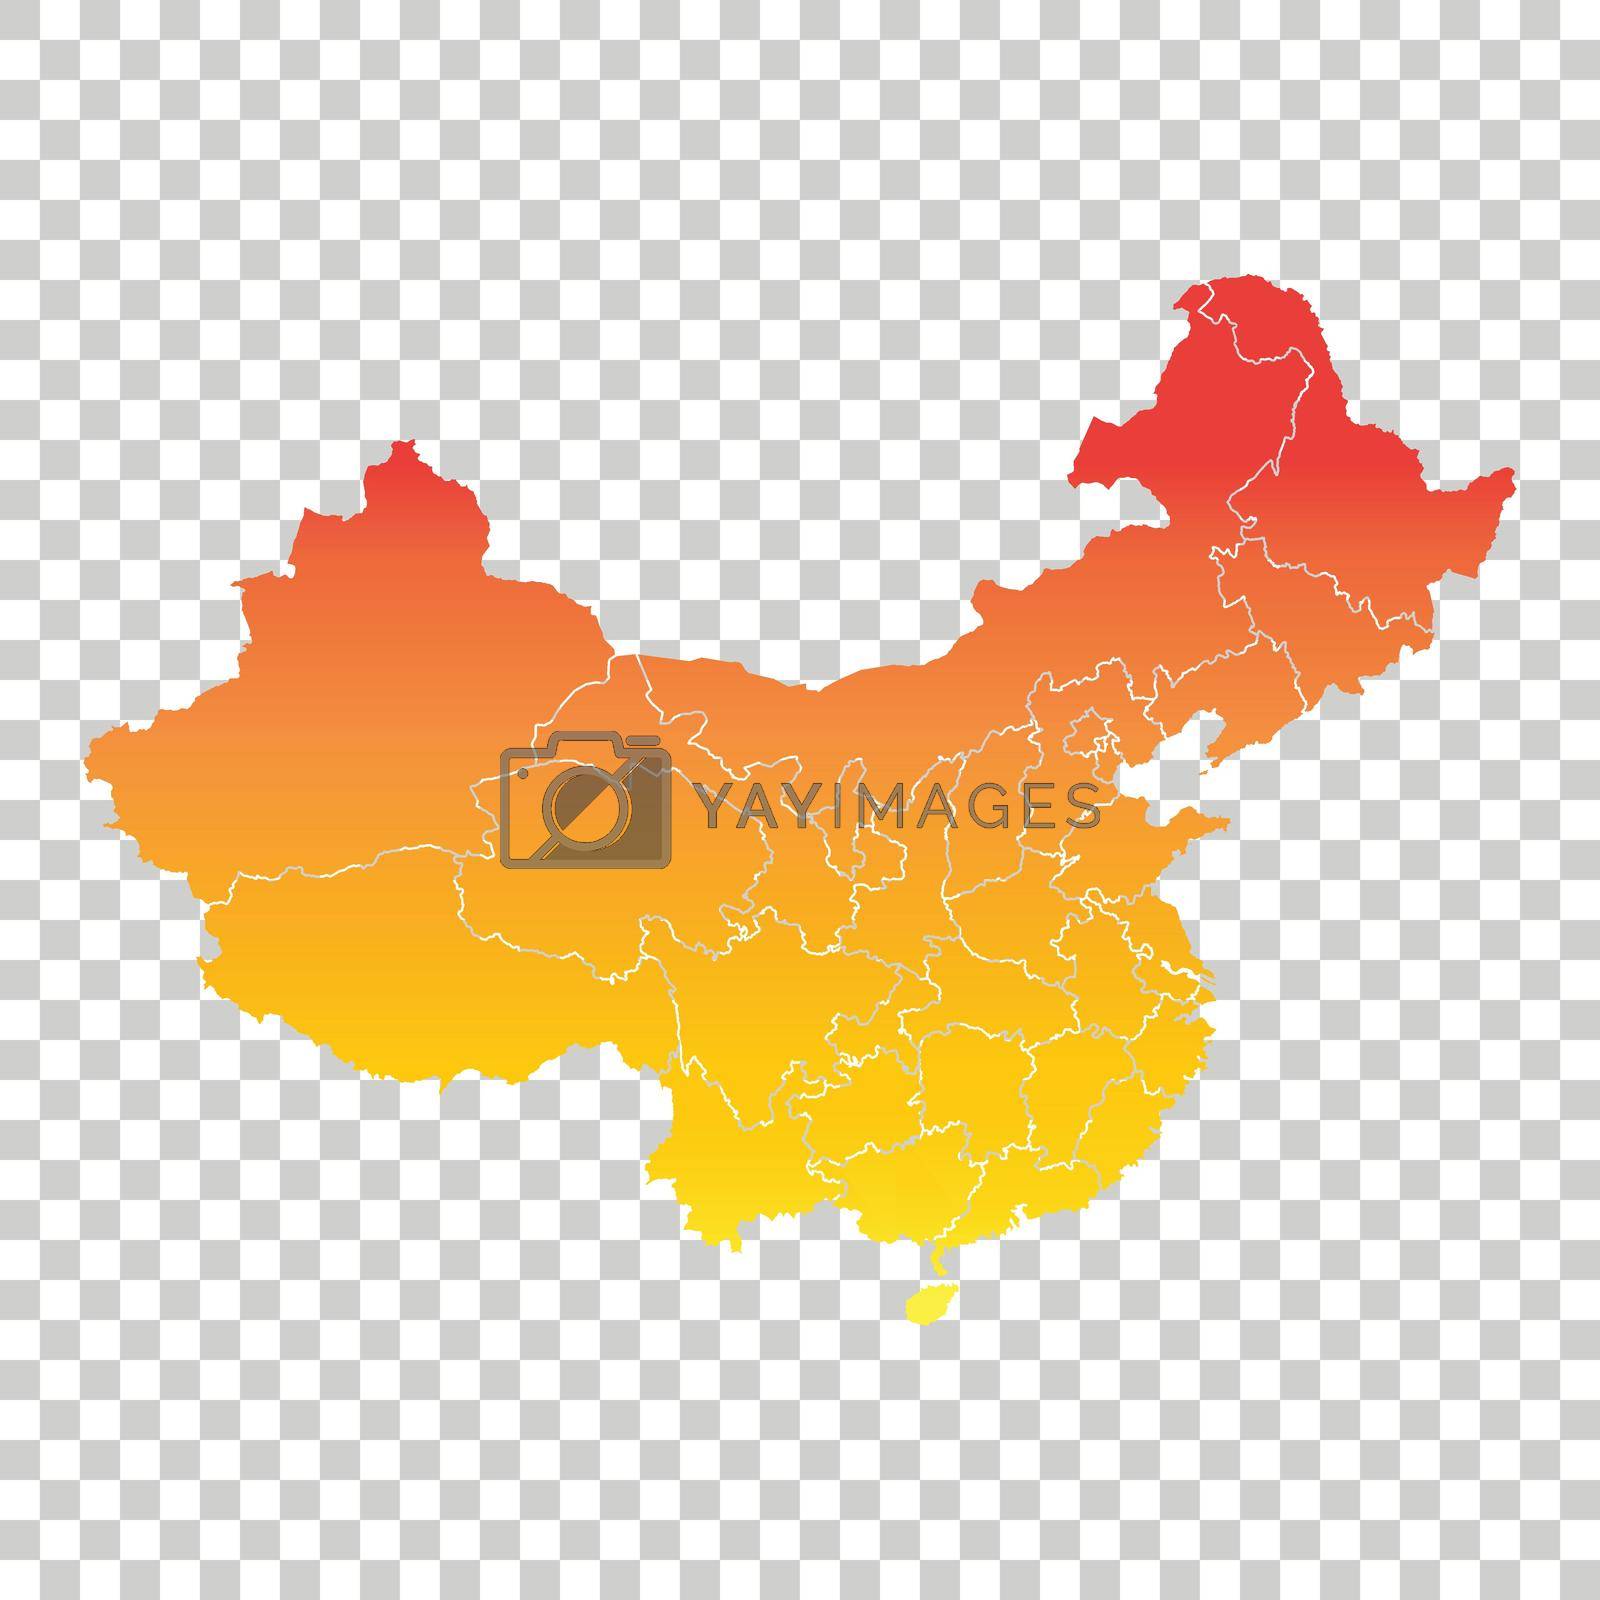 Royalty free image of China map. Colorful orange vector illustration on isolated background by LysenkoA